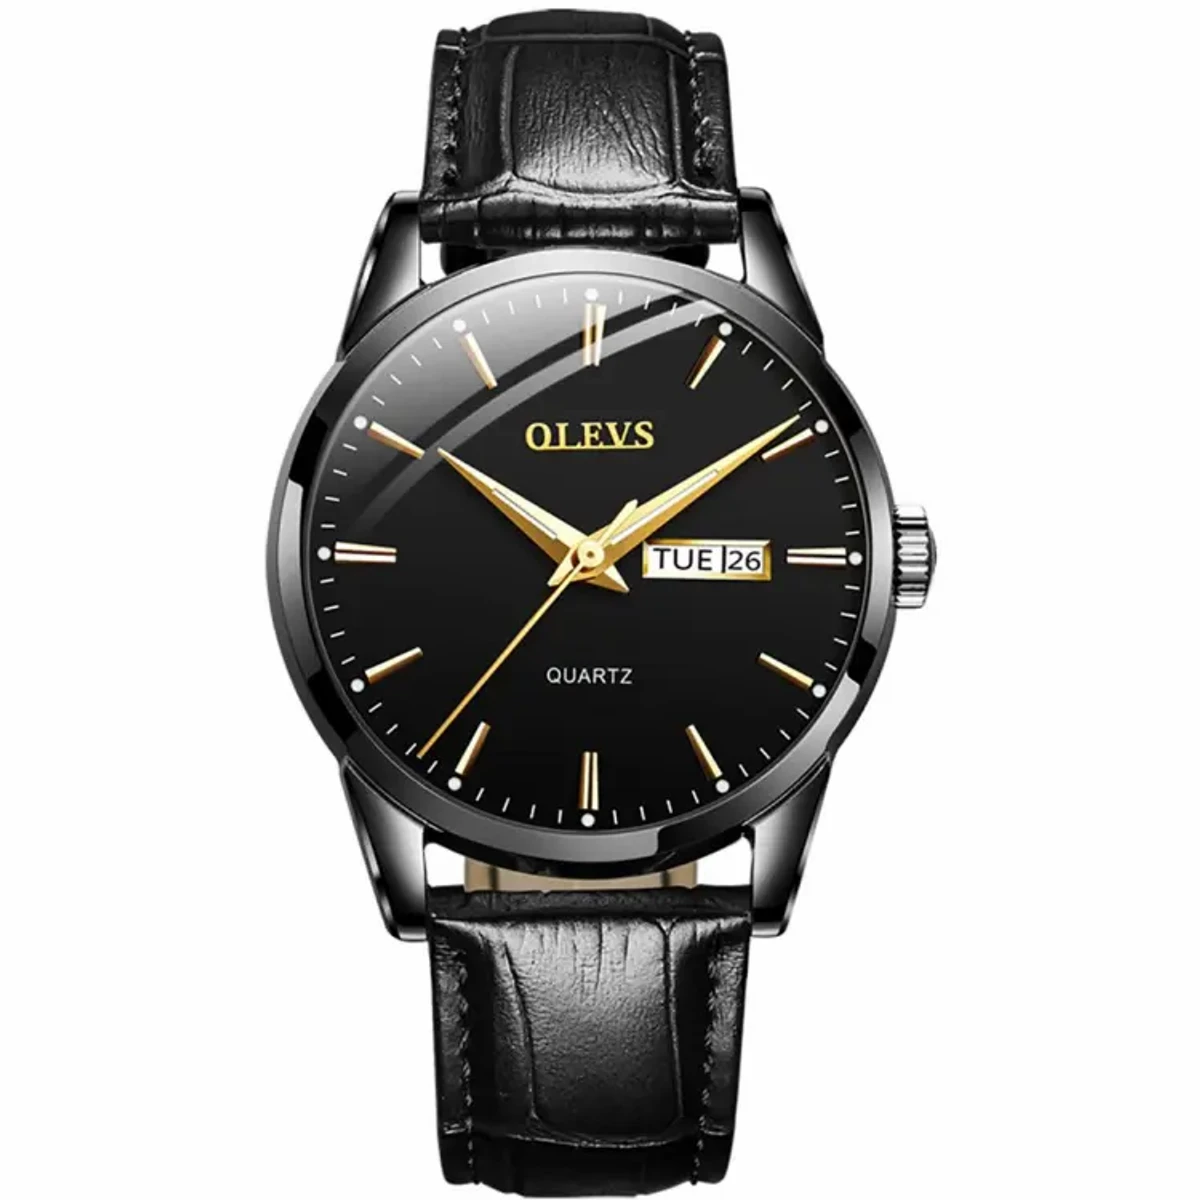 Olevs PU Leather Wrist Watch For Men - Black